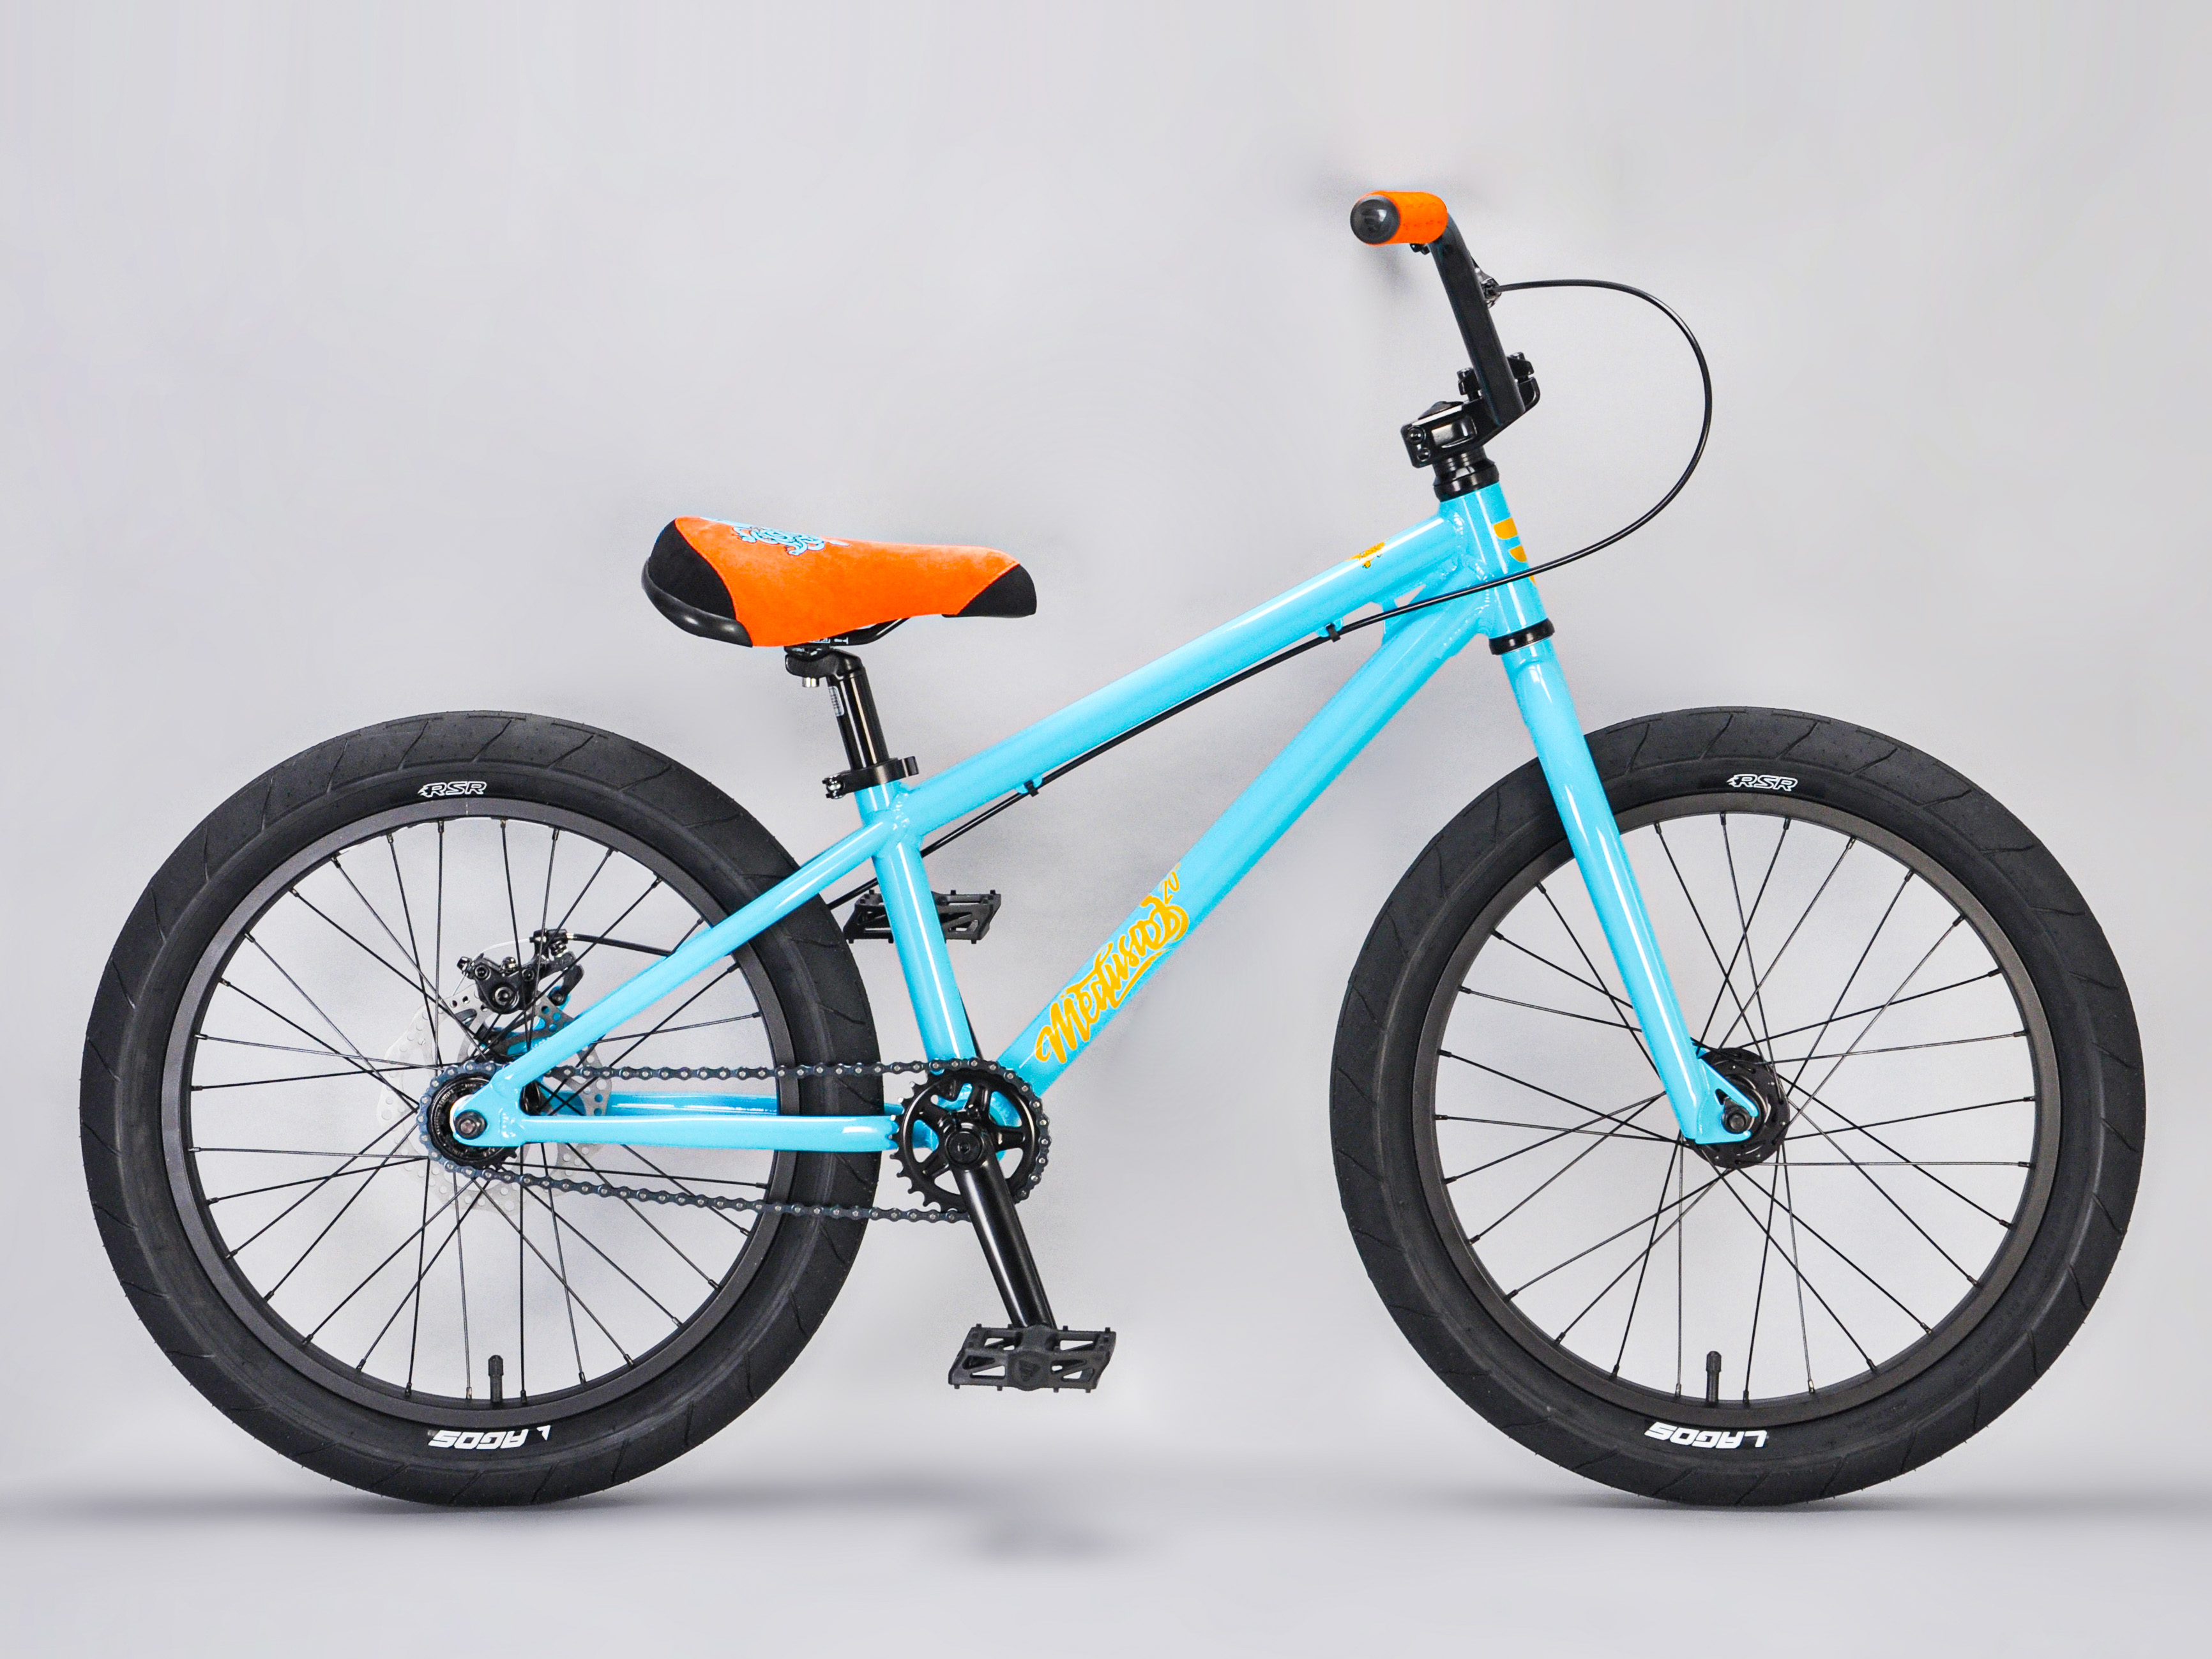 Medusa 20 inch wheelie bike for kids and adults